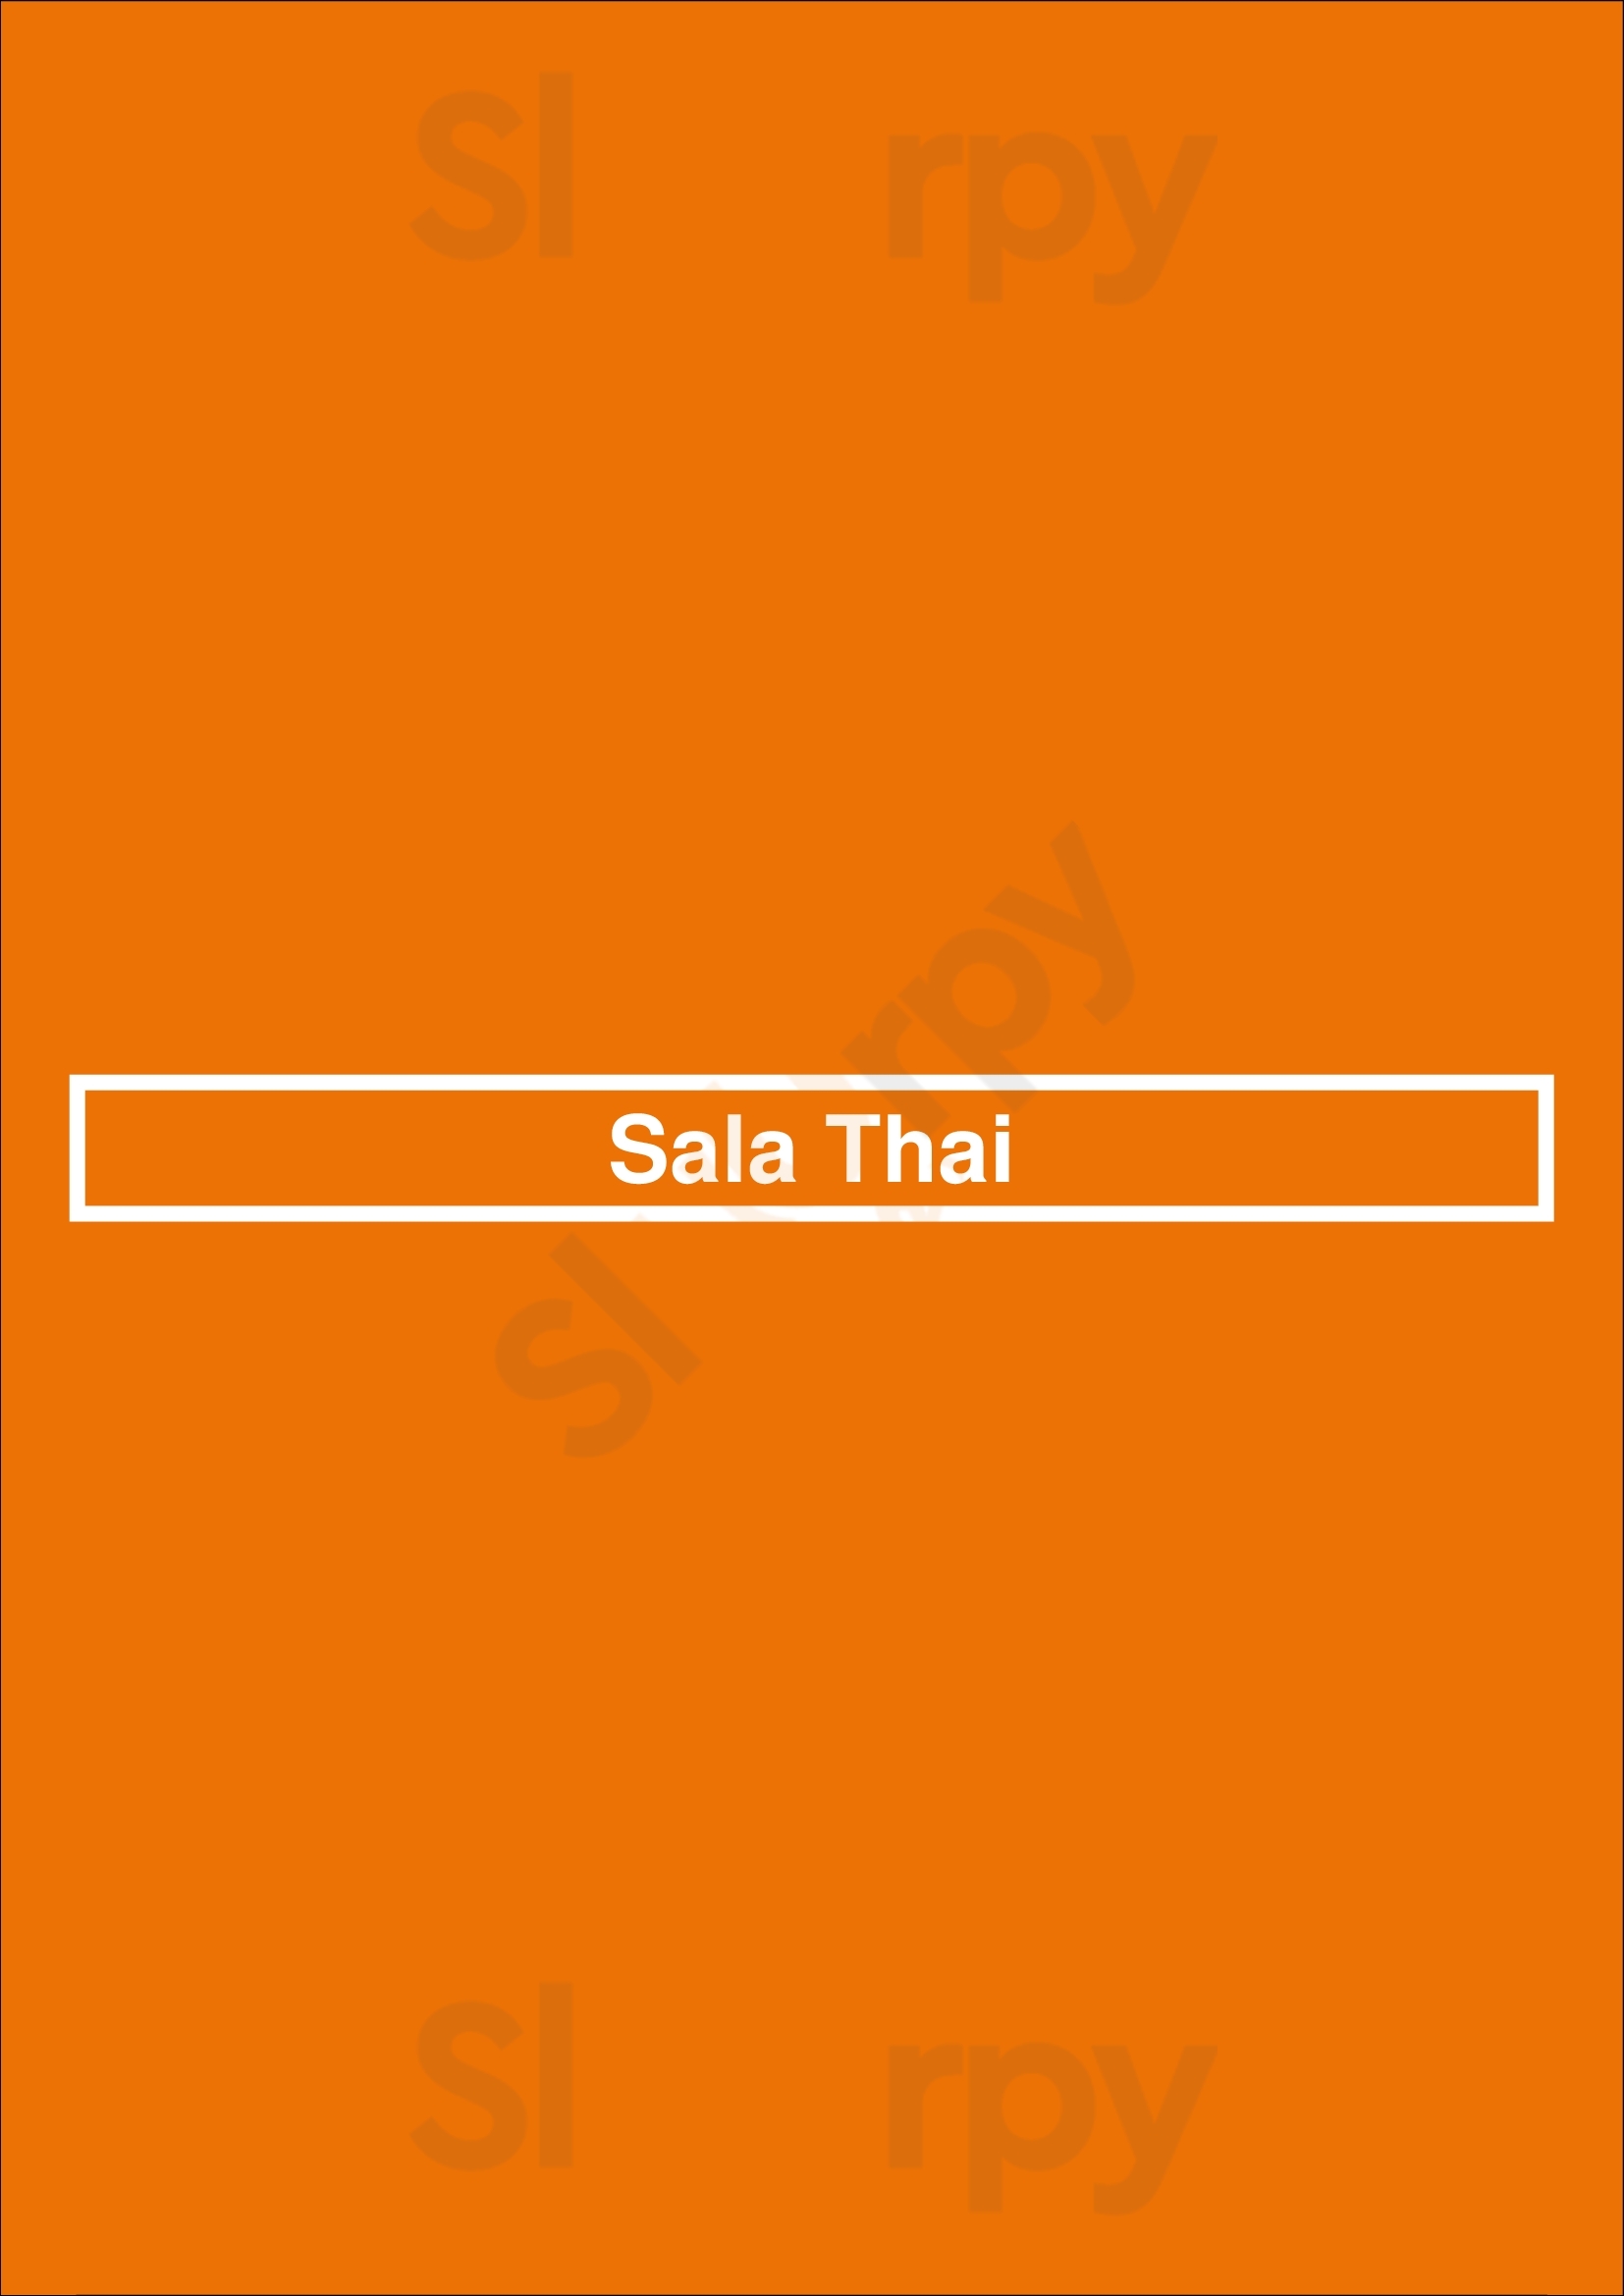 Salathai Thai Restaurant Vancouver Menu - 1